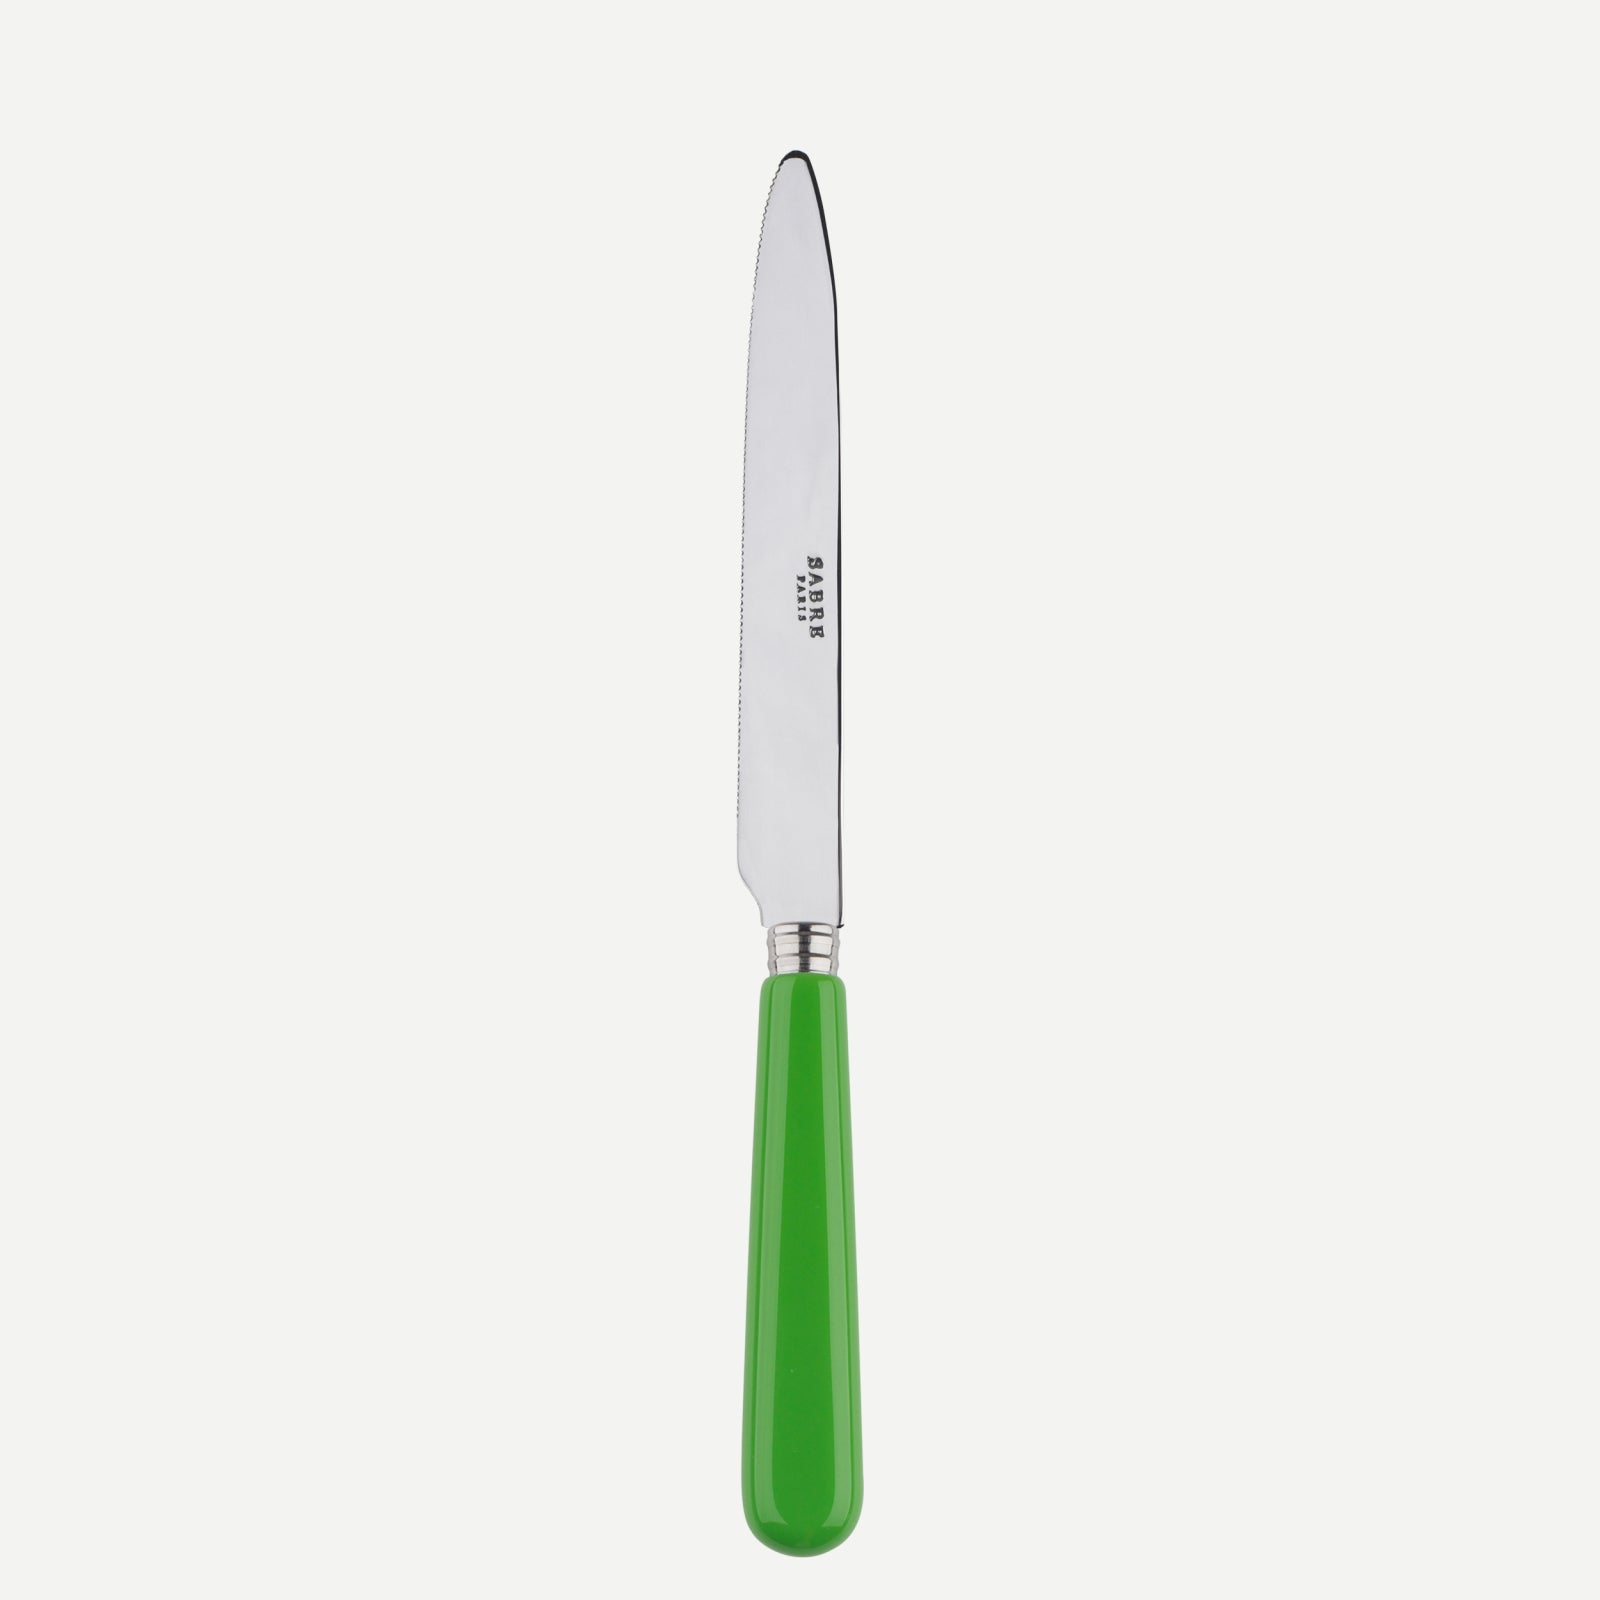 Serrated Dinner knife Blade - Pop unis - Streaming green